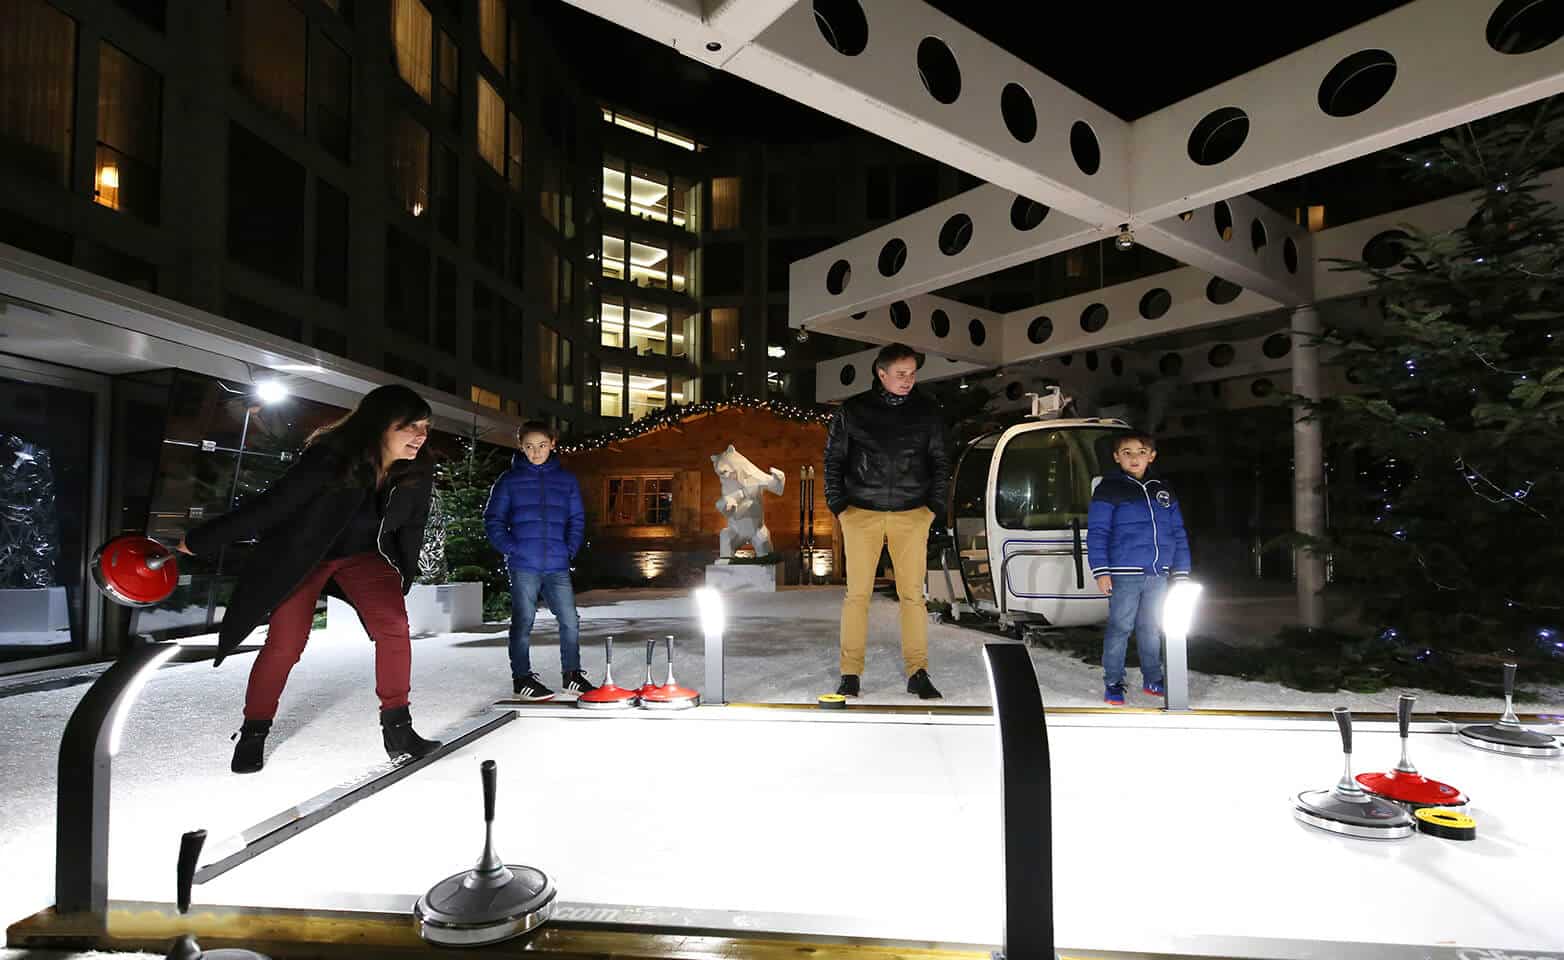 Artificial Eisstock curling lane at luxurious Kempinski hotel in Geneva